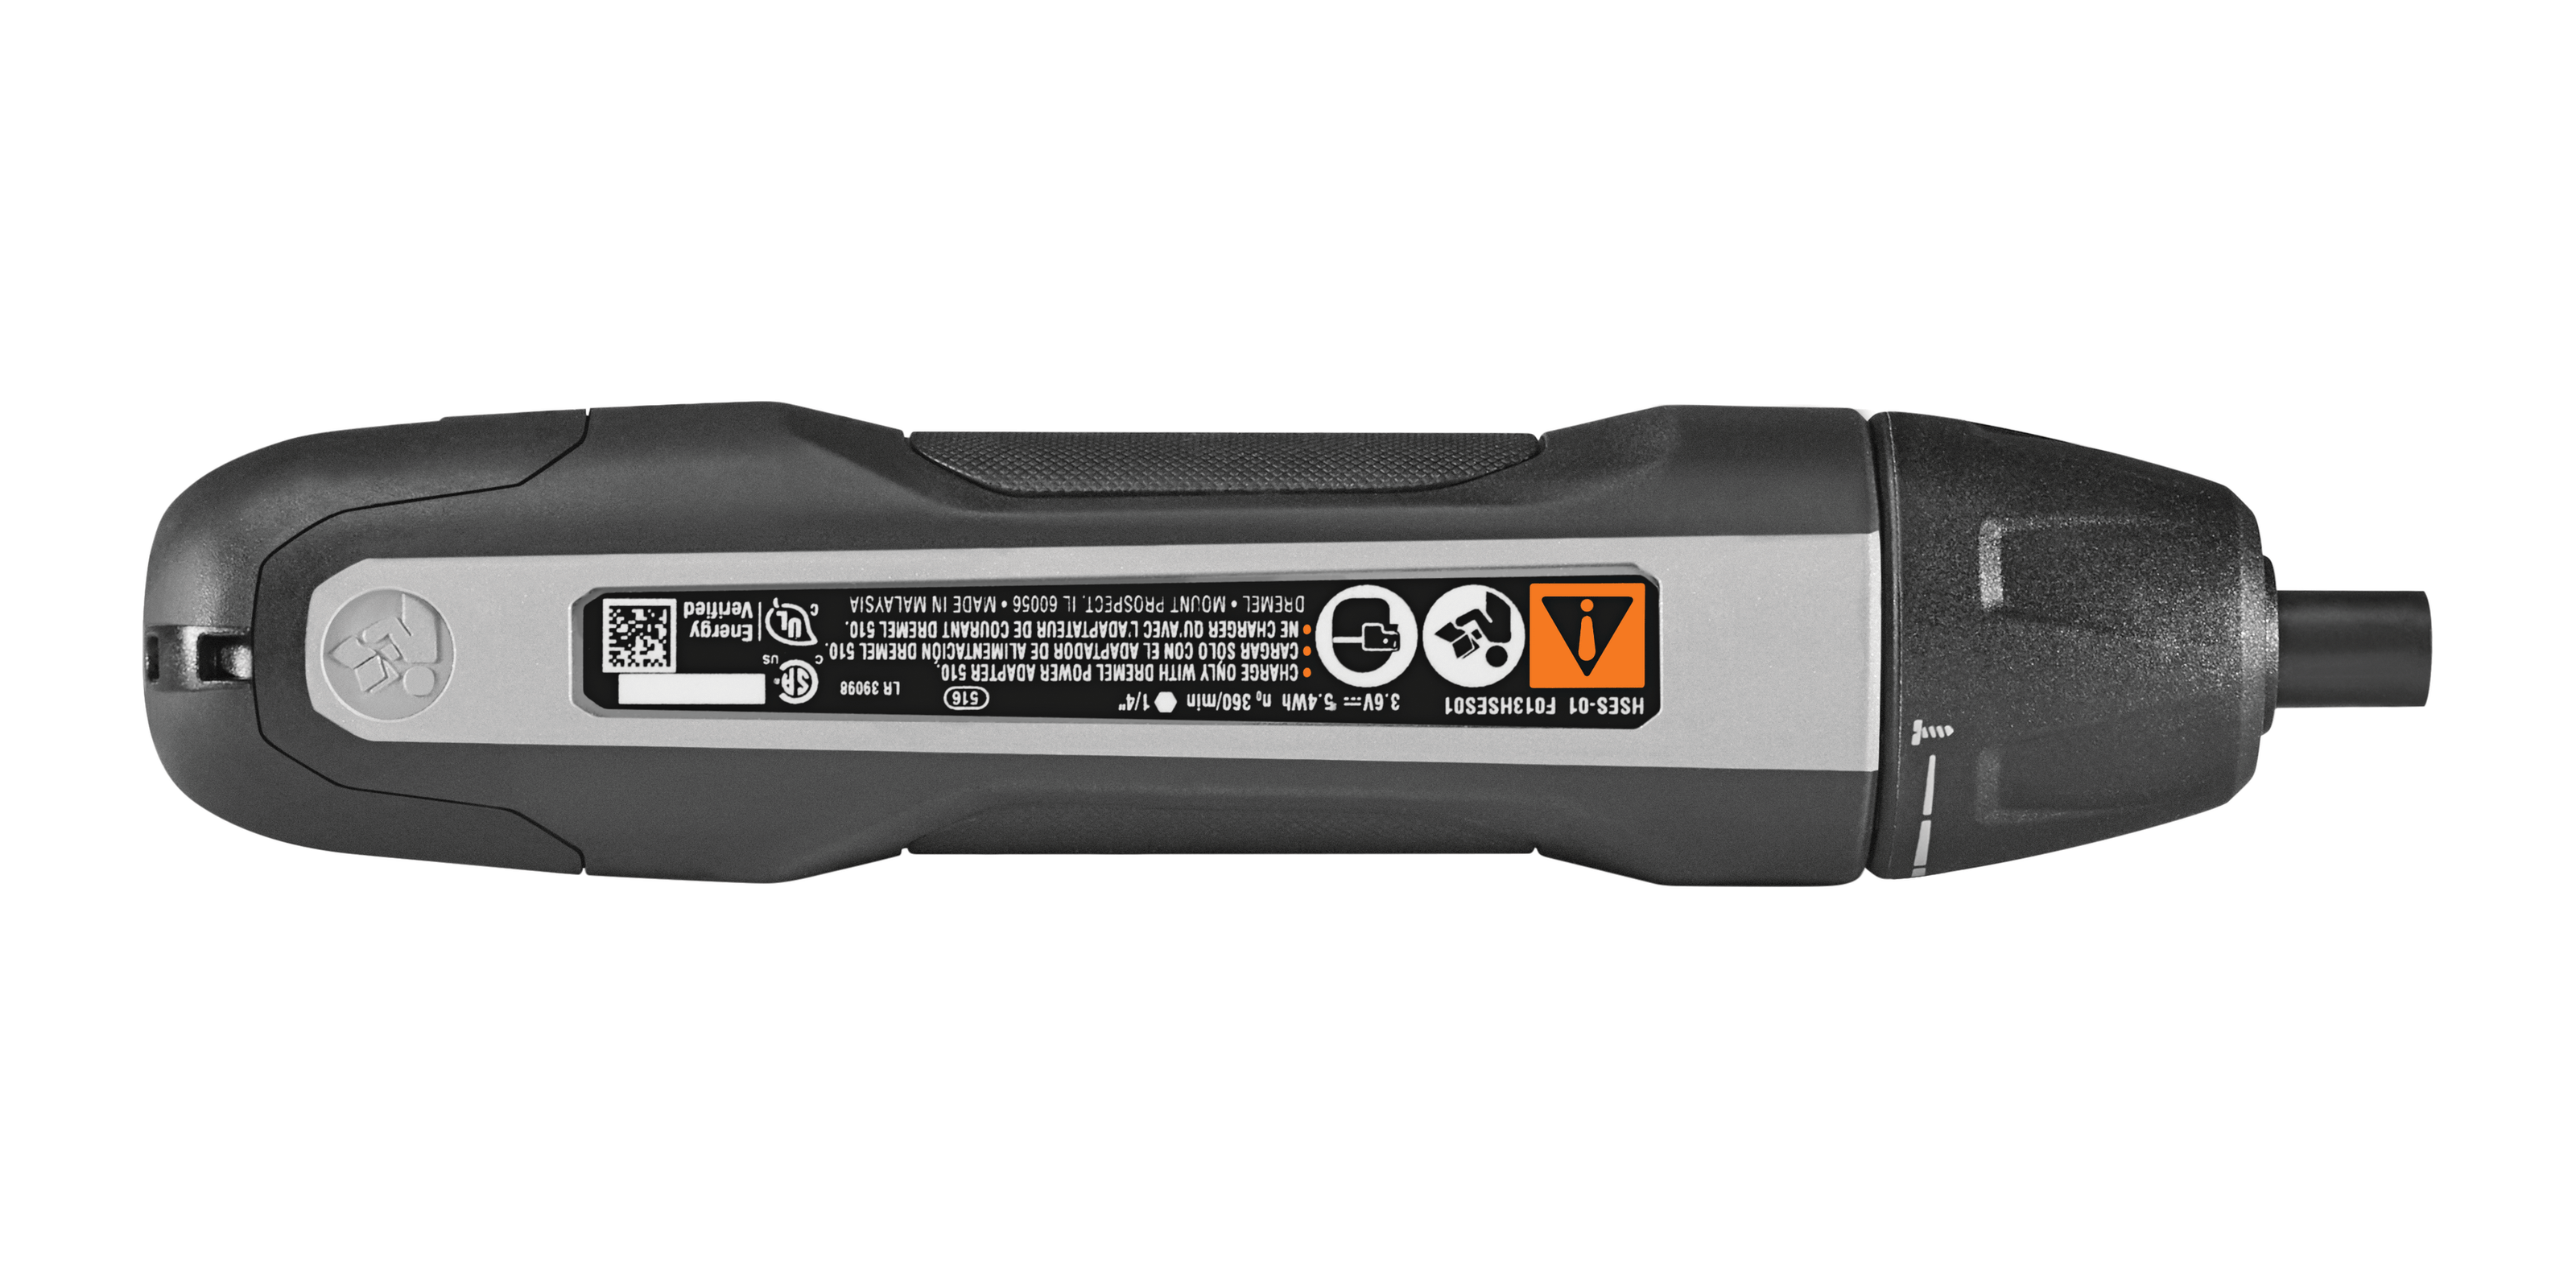 Dremel 4V Cordless USB Electric Screwdriver with 4V Cordless USB Glue Pen